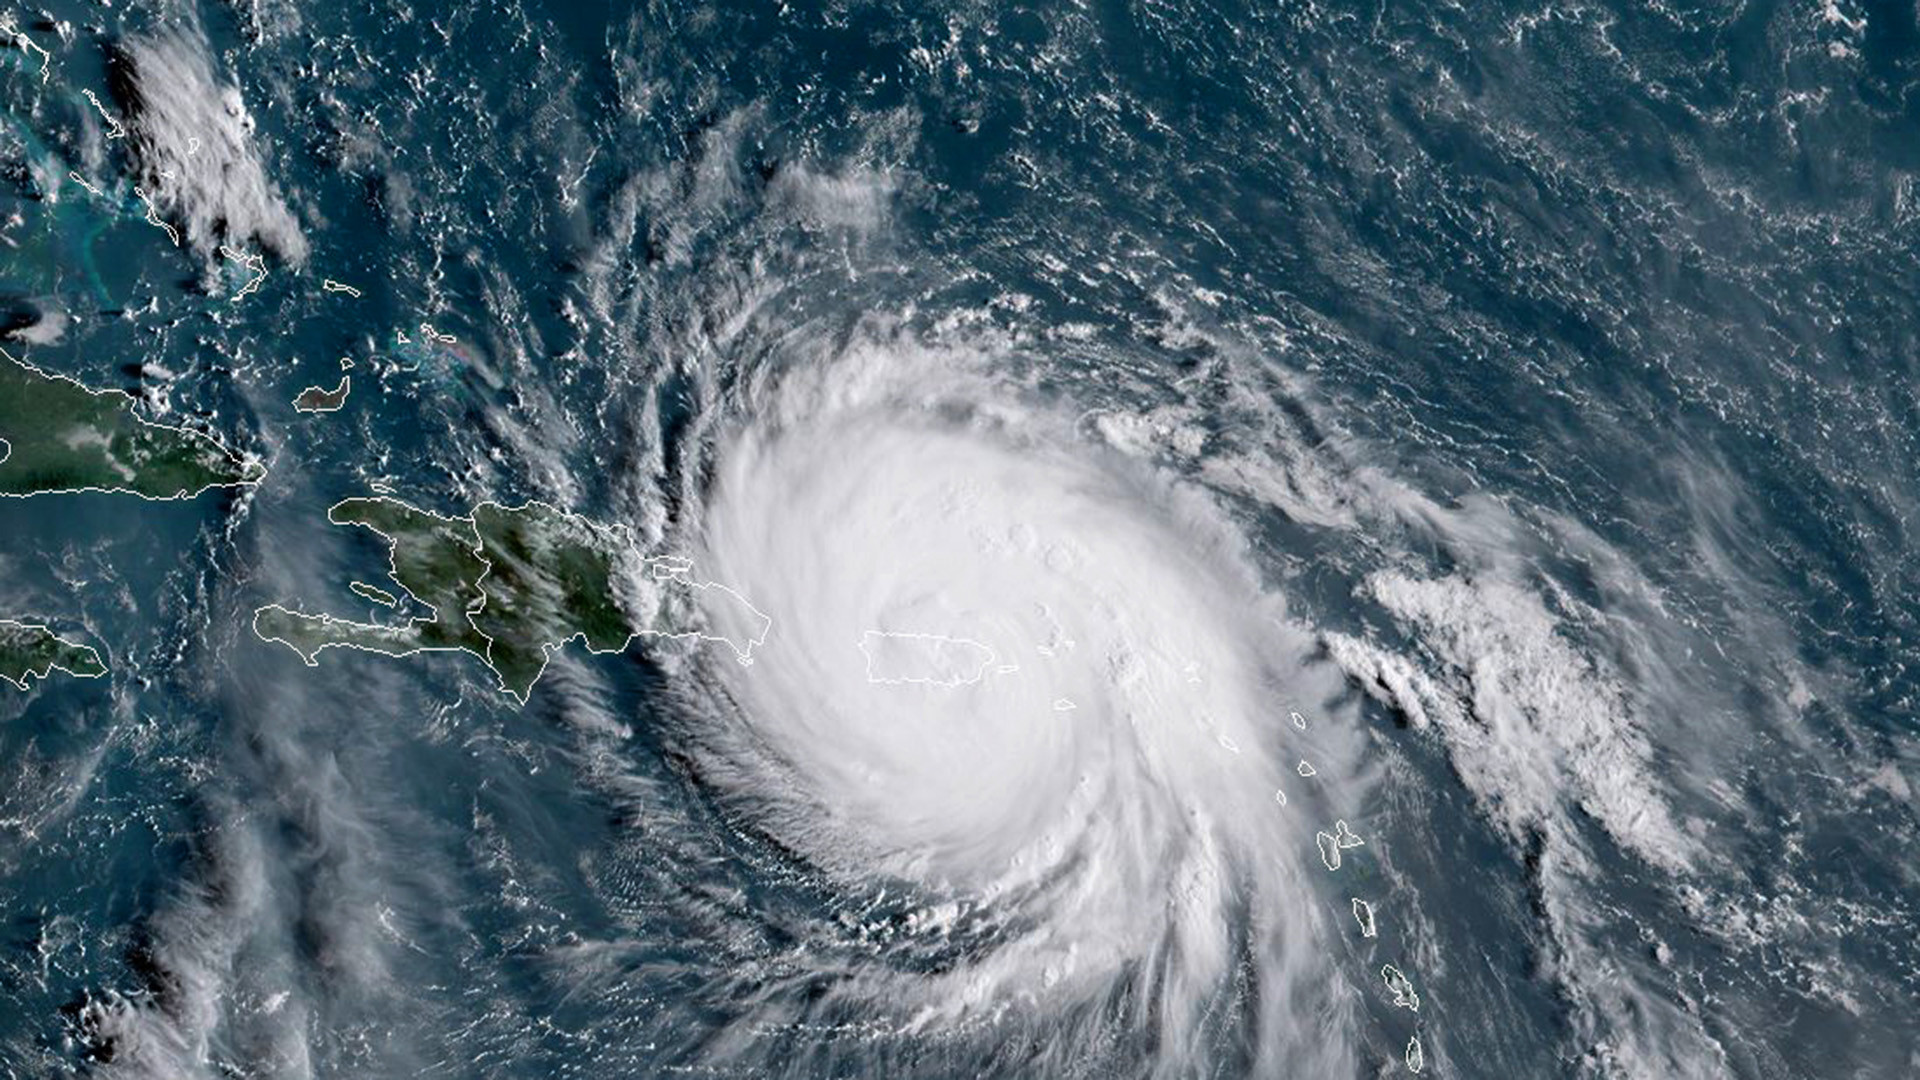 Official: Hurricane Maria set Puerto Rico back decades - Chicago Tribune